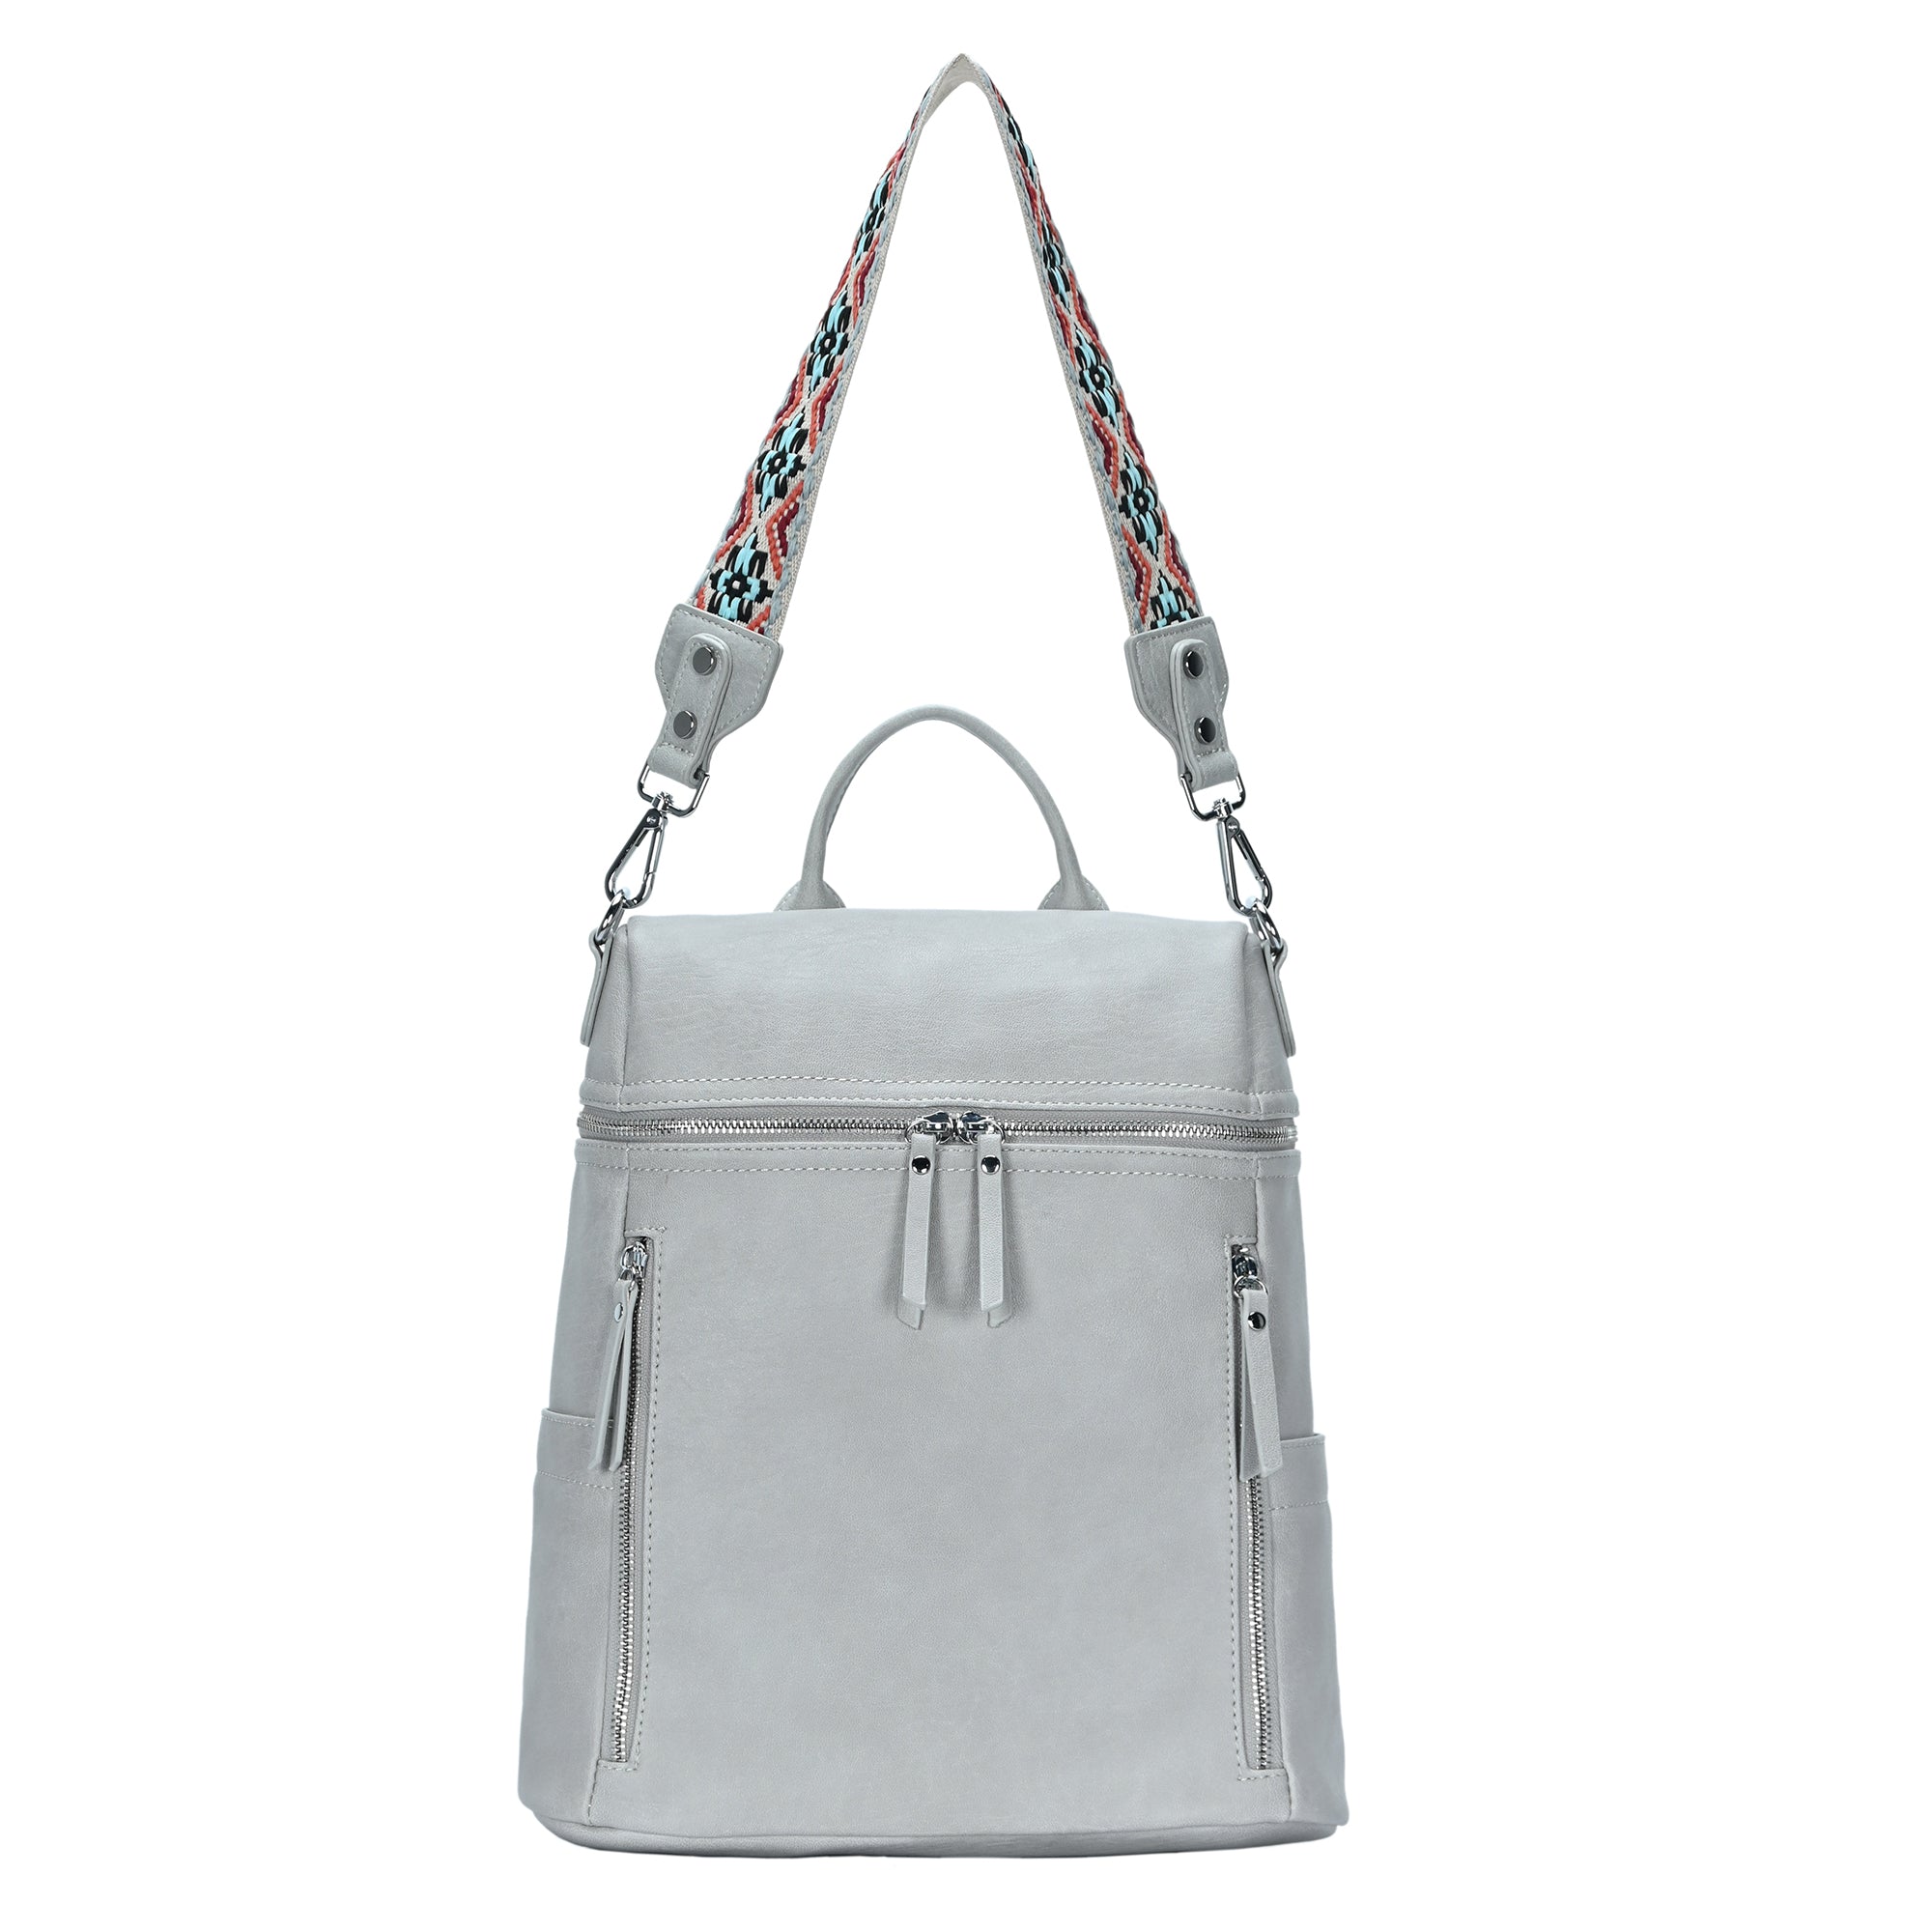 eSheep Designs: Customizing a Convertible Backpack/Sling Bag